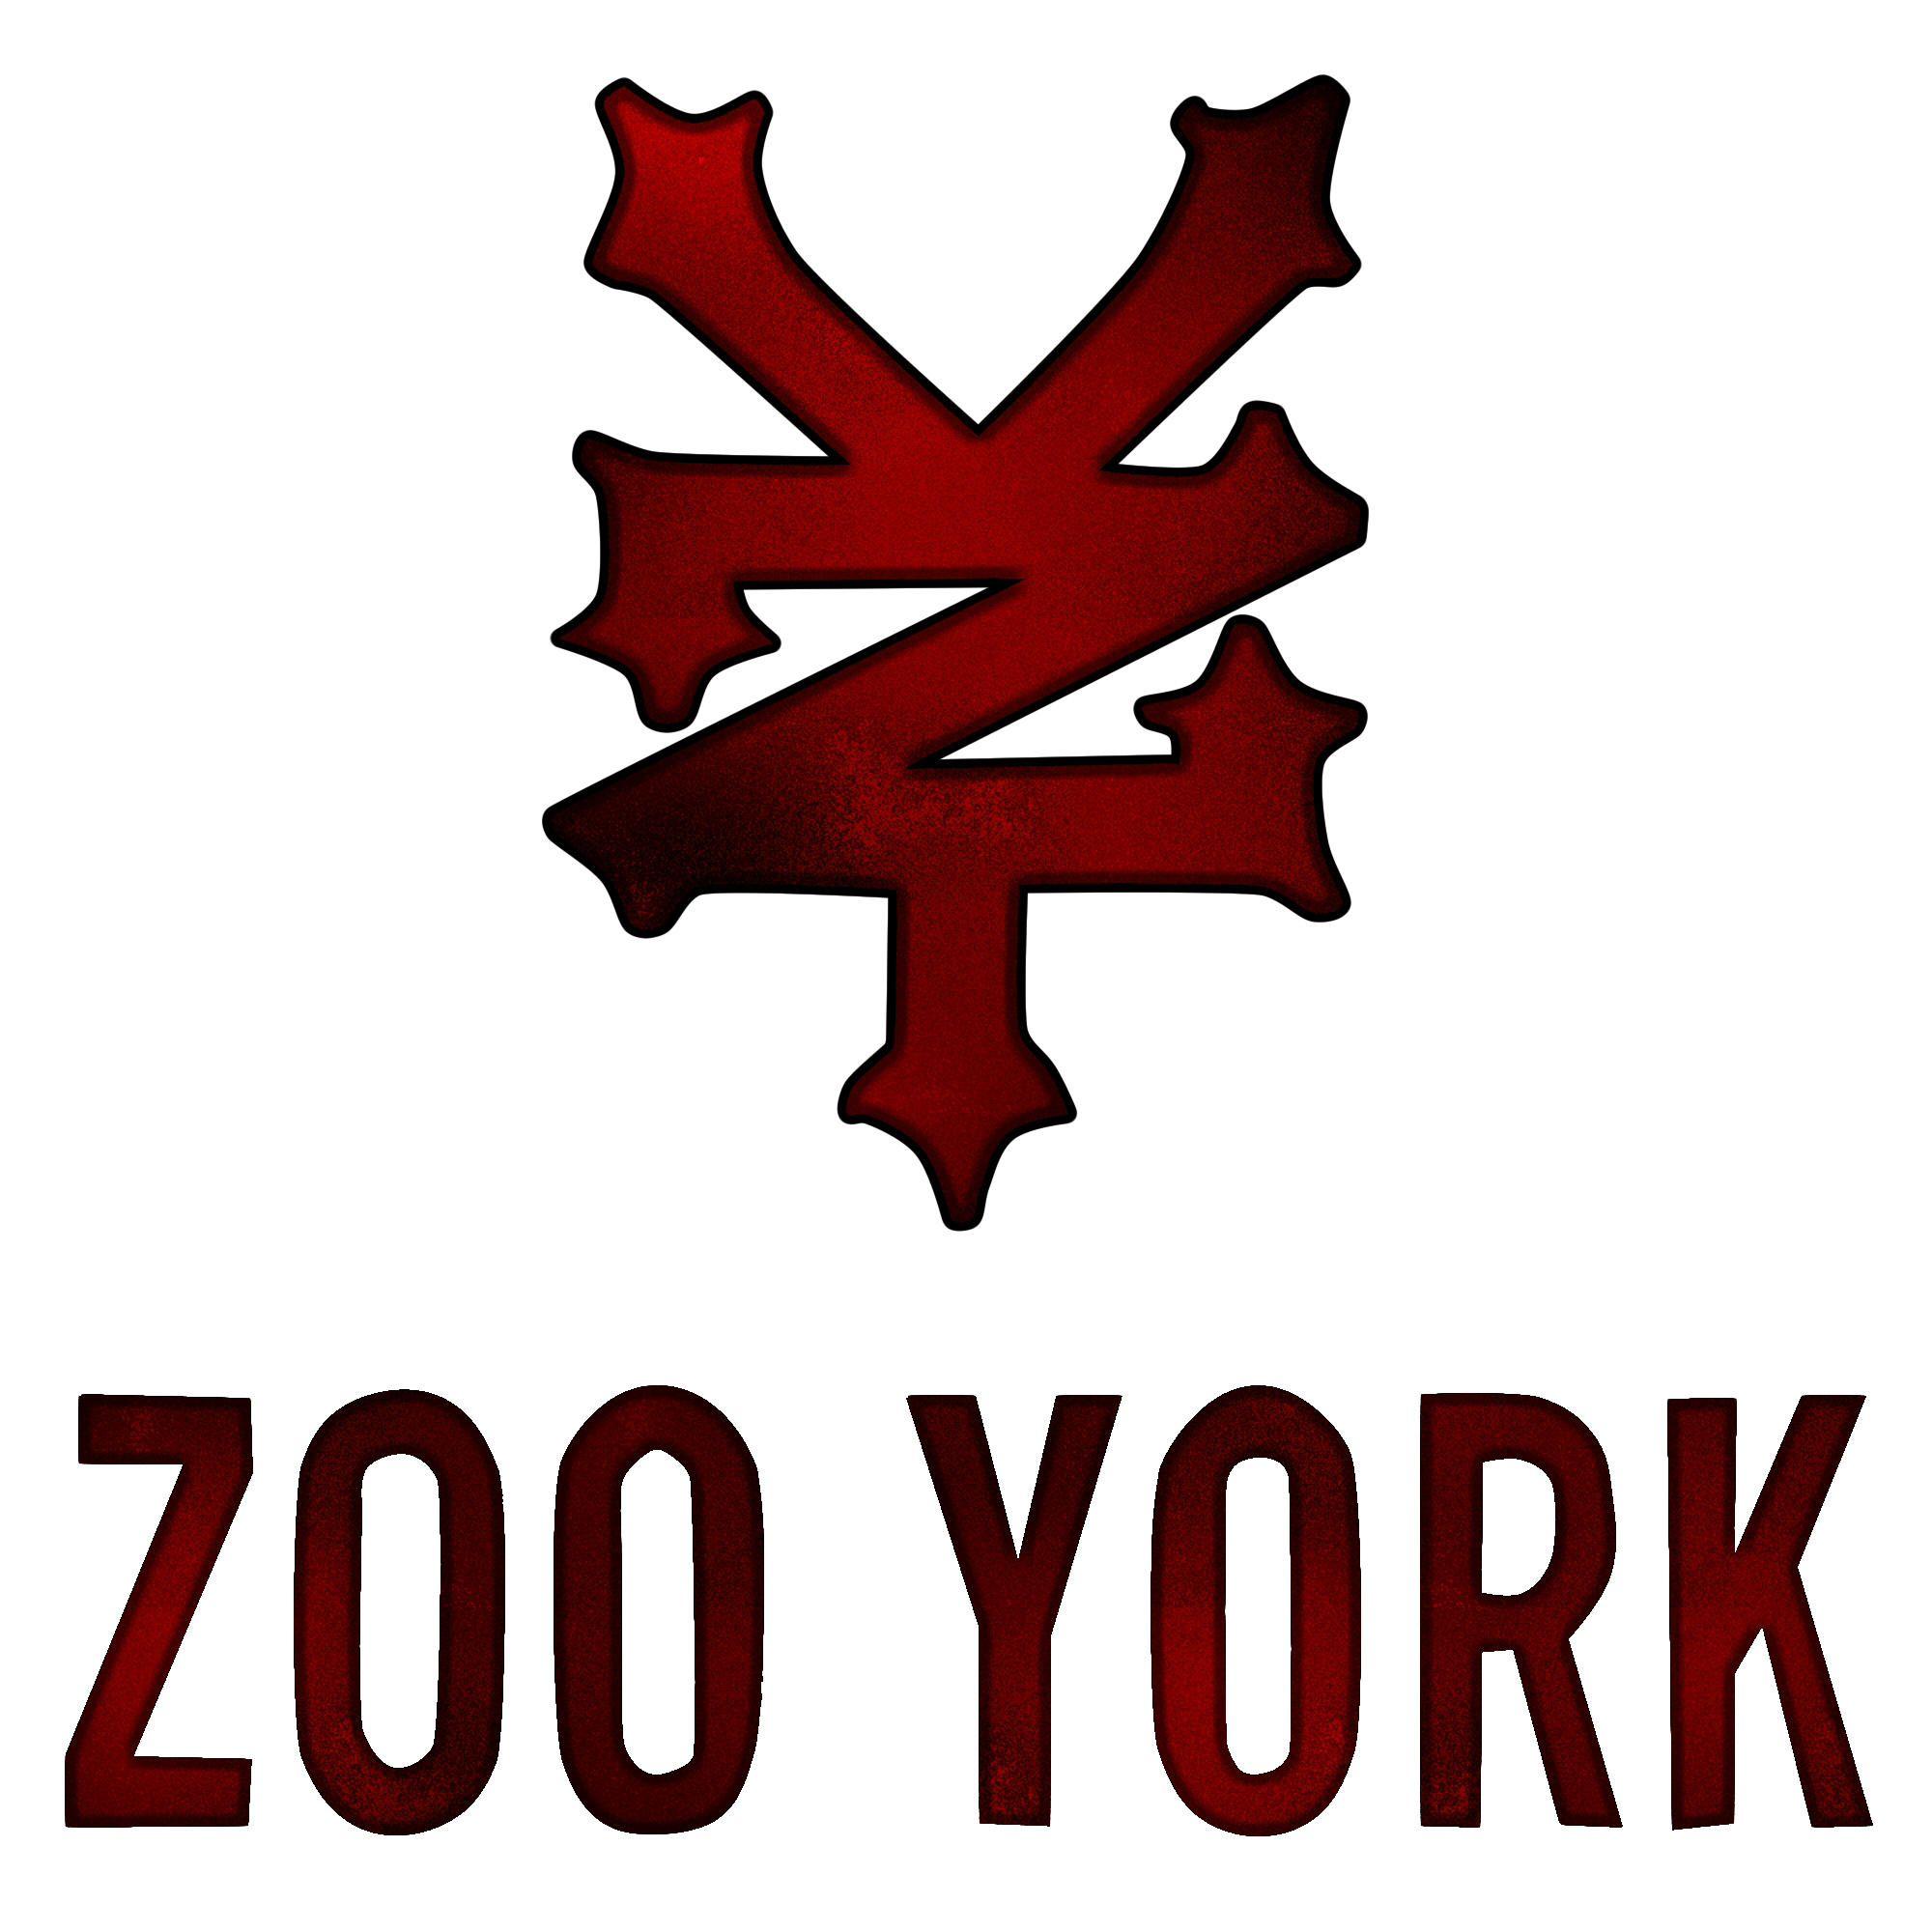 Red Zoo York Logo - Zoo York Logo Red Ediction by PRonalddinho on DeviantArt